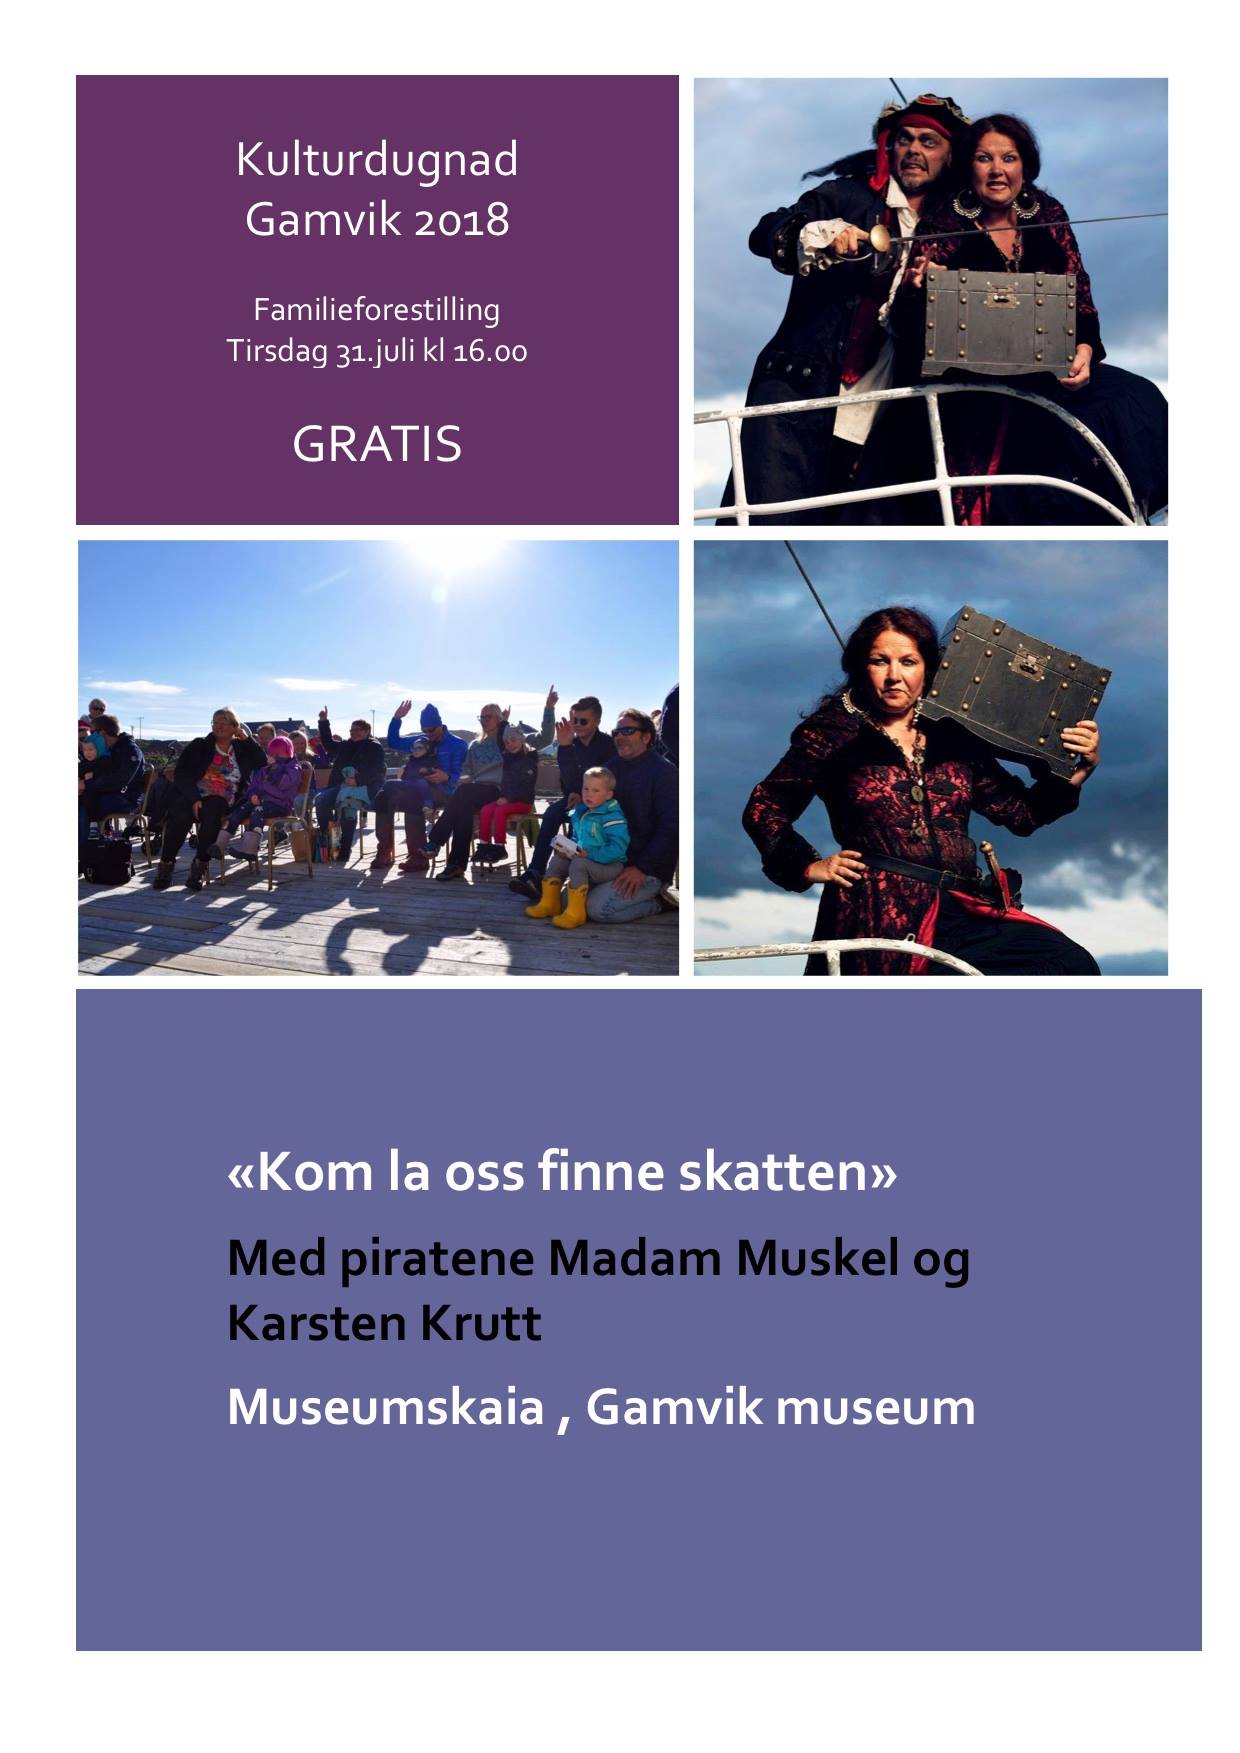 Program Kulturdugnad Gamvik 2018 6